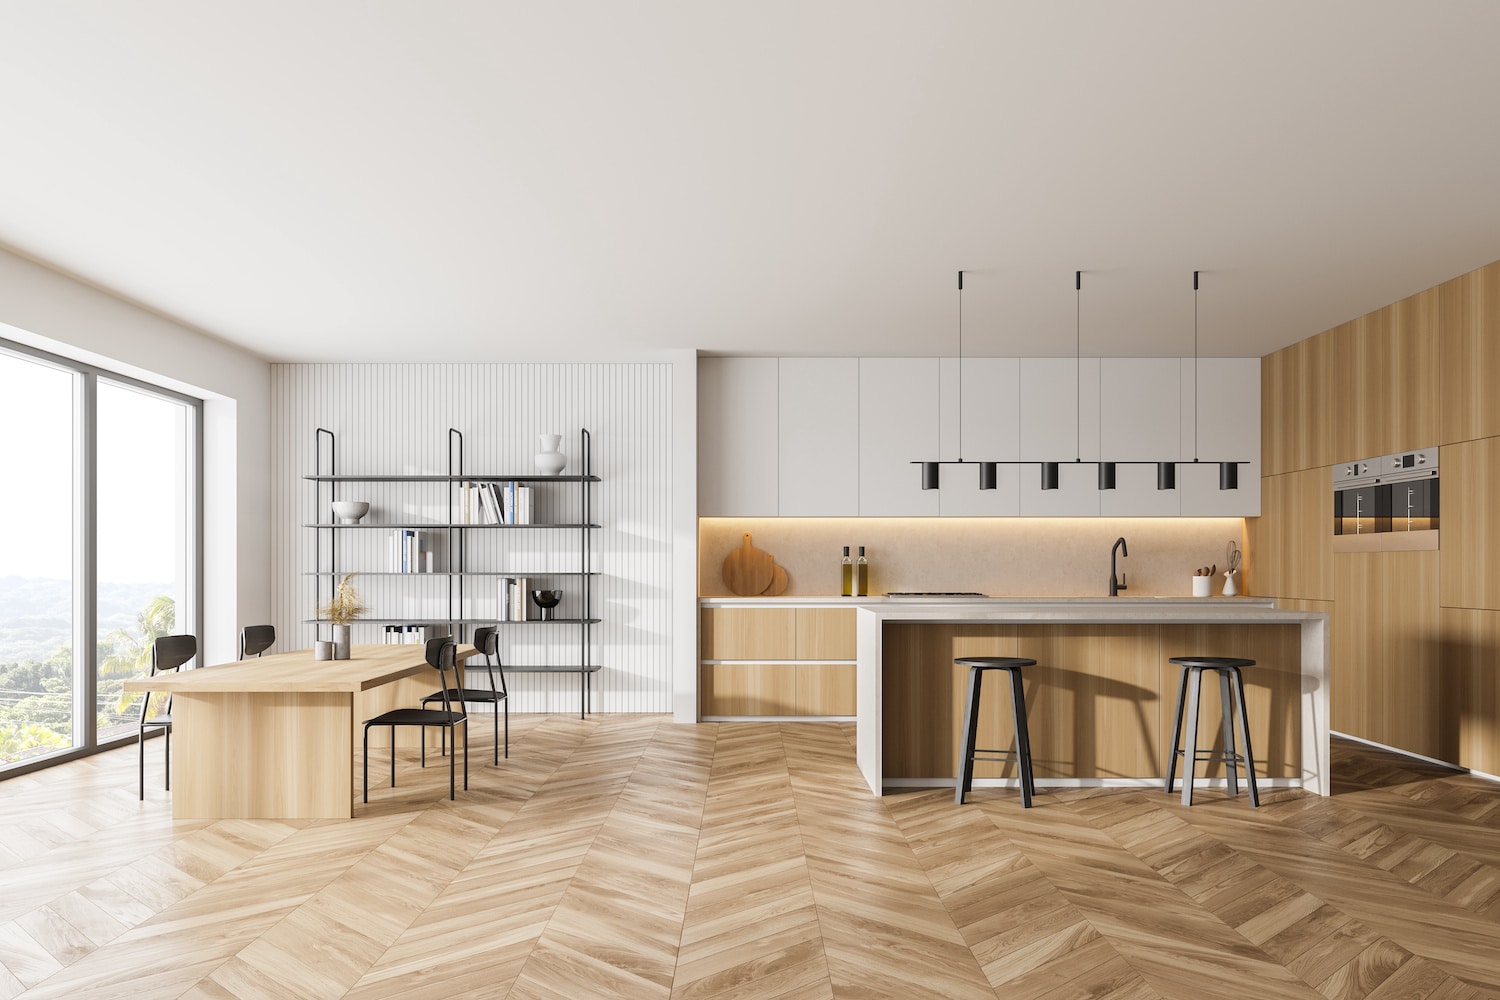 mixed hardwood flooring light bright minimalist kitchen design with patterned wood floors